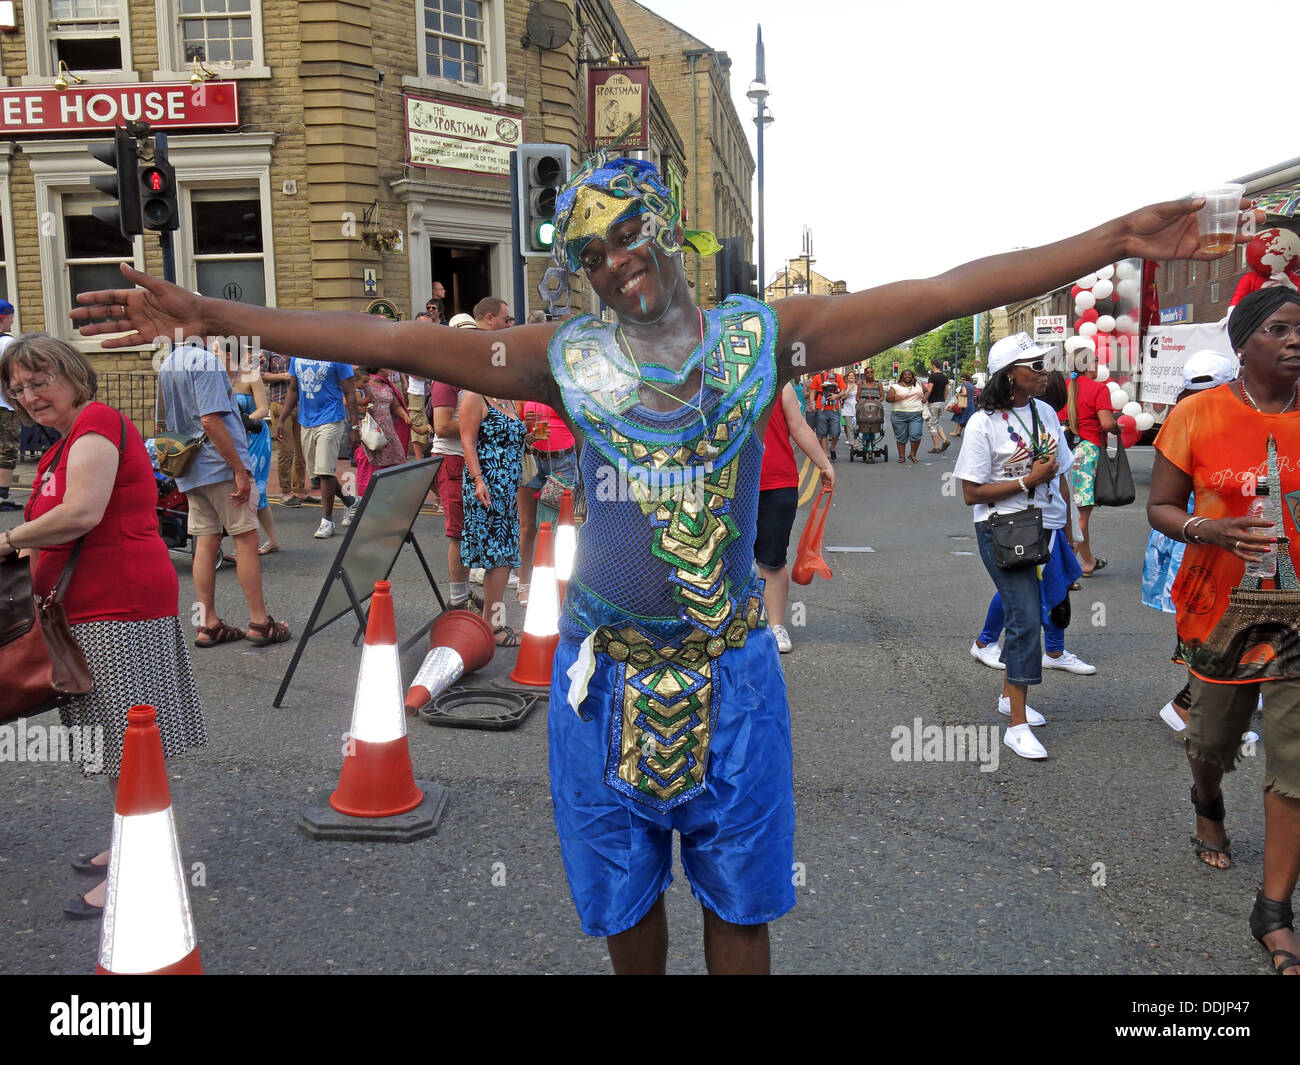 Kostümierte Tänzer in blau aus Huddersfield Karneval 2013 Afrika Karibik Parade Straßenfest Stockfoto